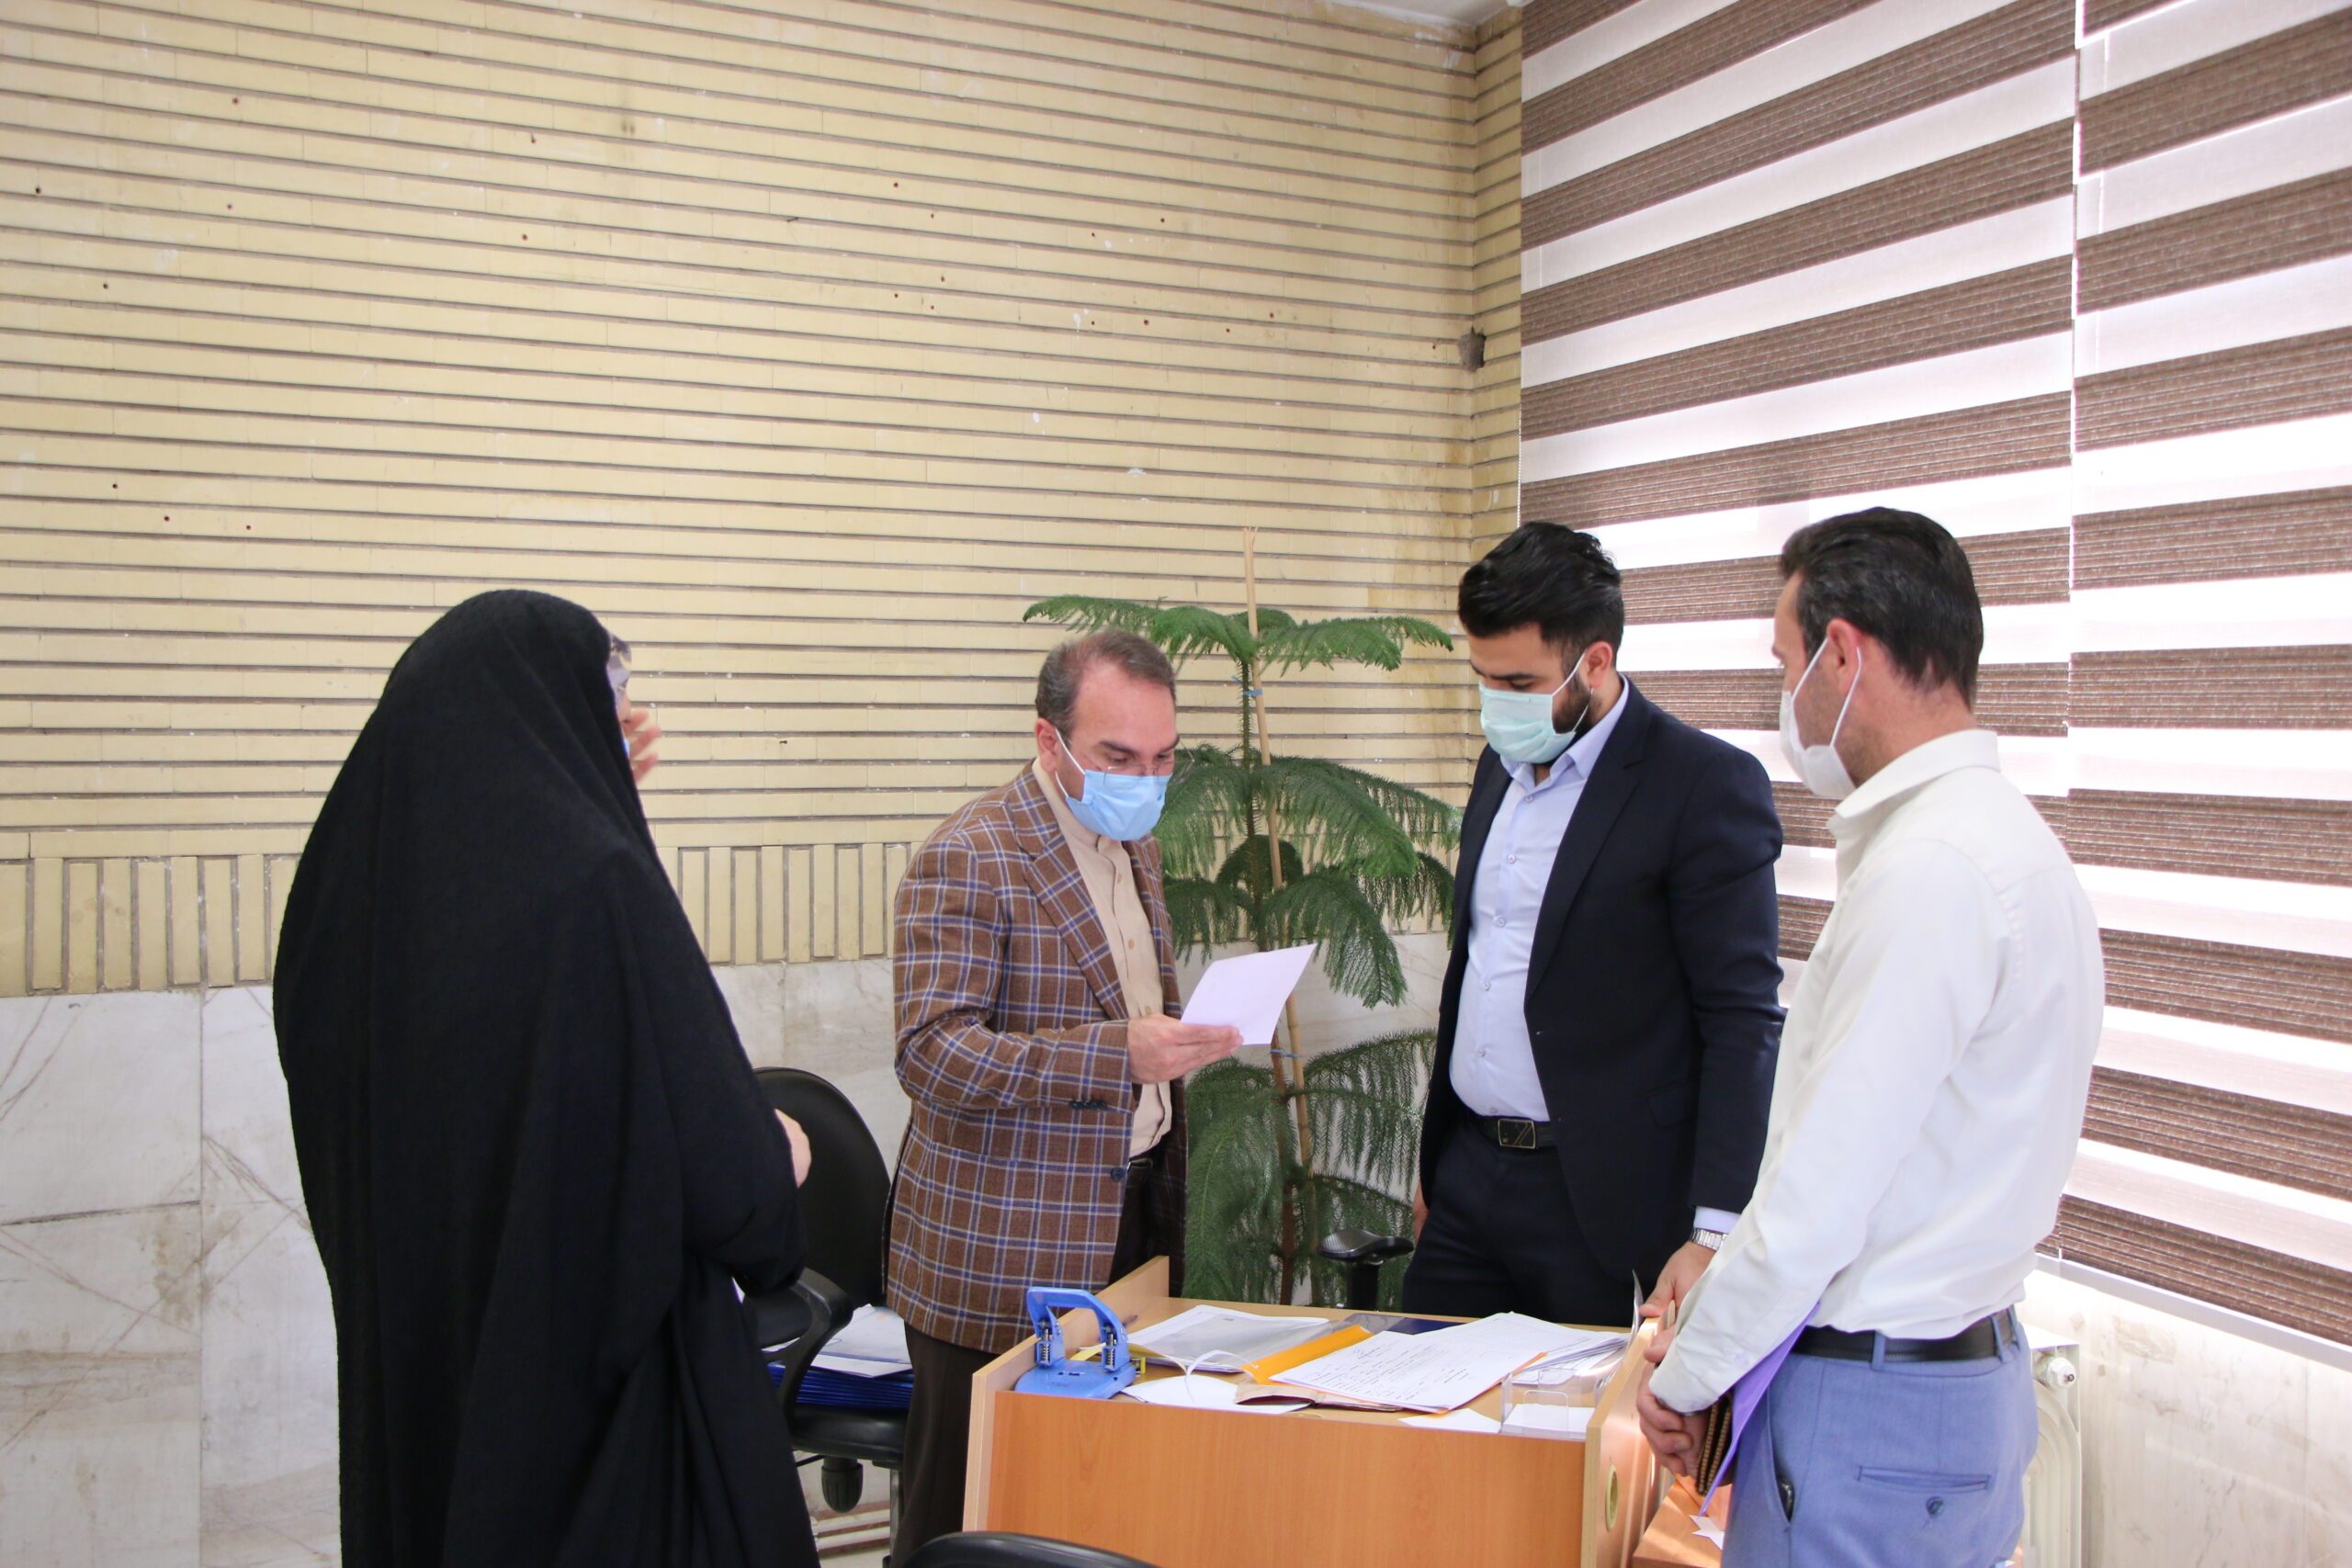 IMG 9489 scaled | ششمین روز ثبت نام داوطلبان ششمین دوره انتخابات شورای اسلامی روستاهای بخش کهریزک